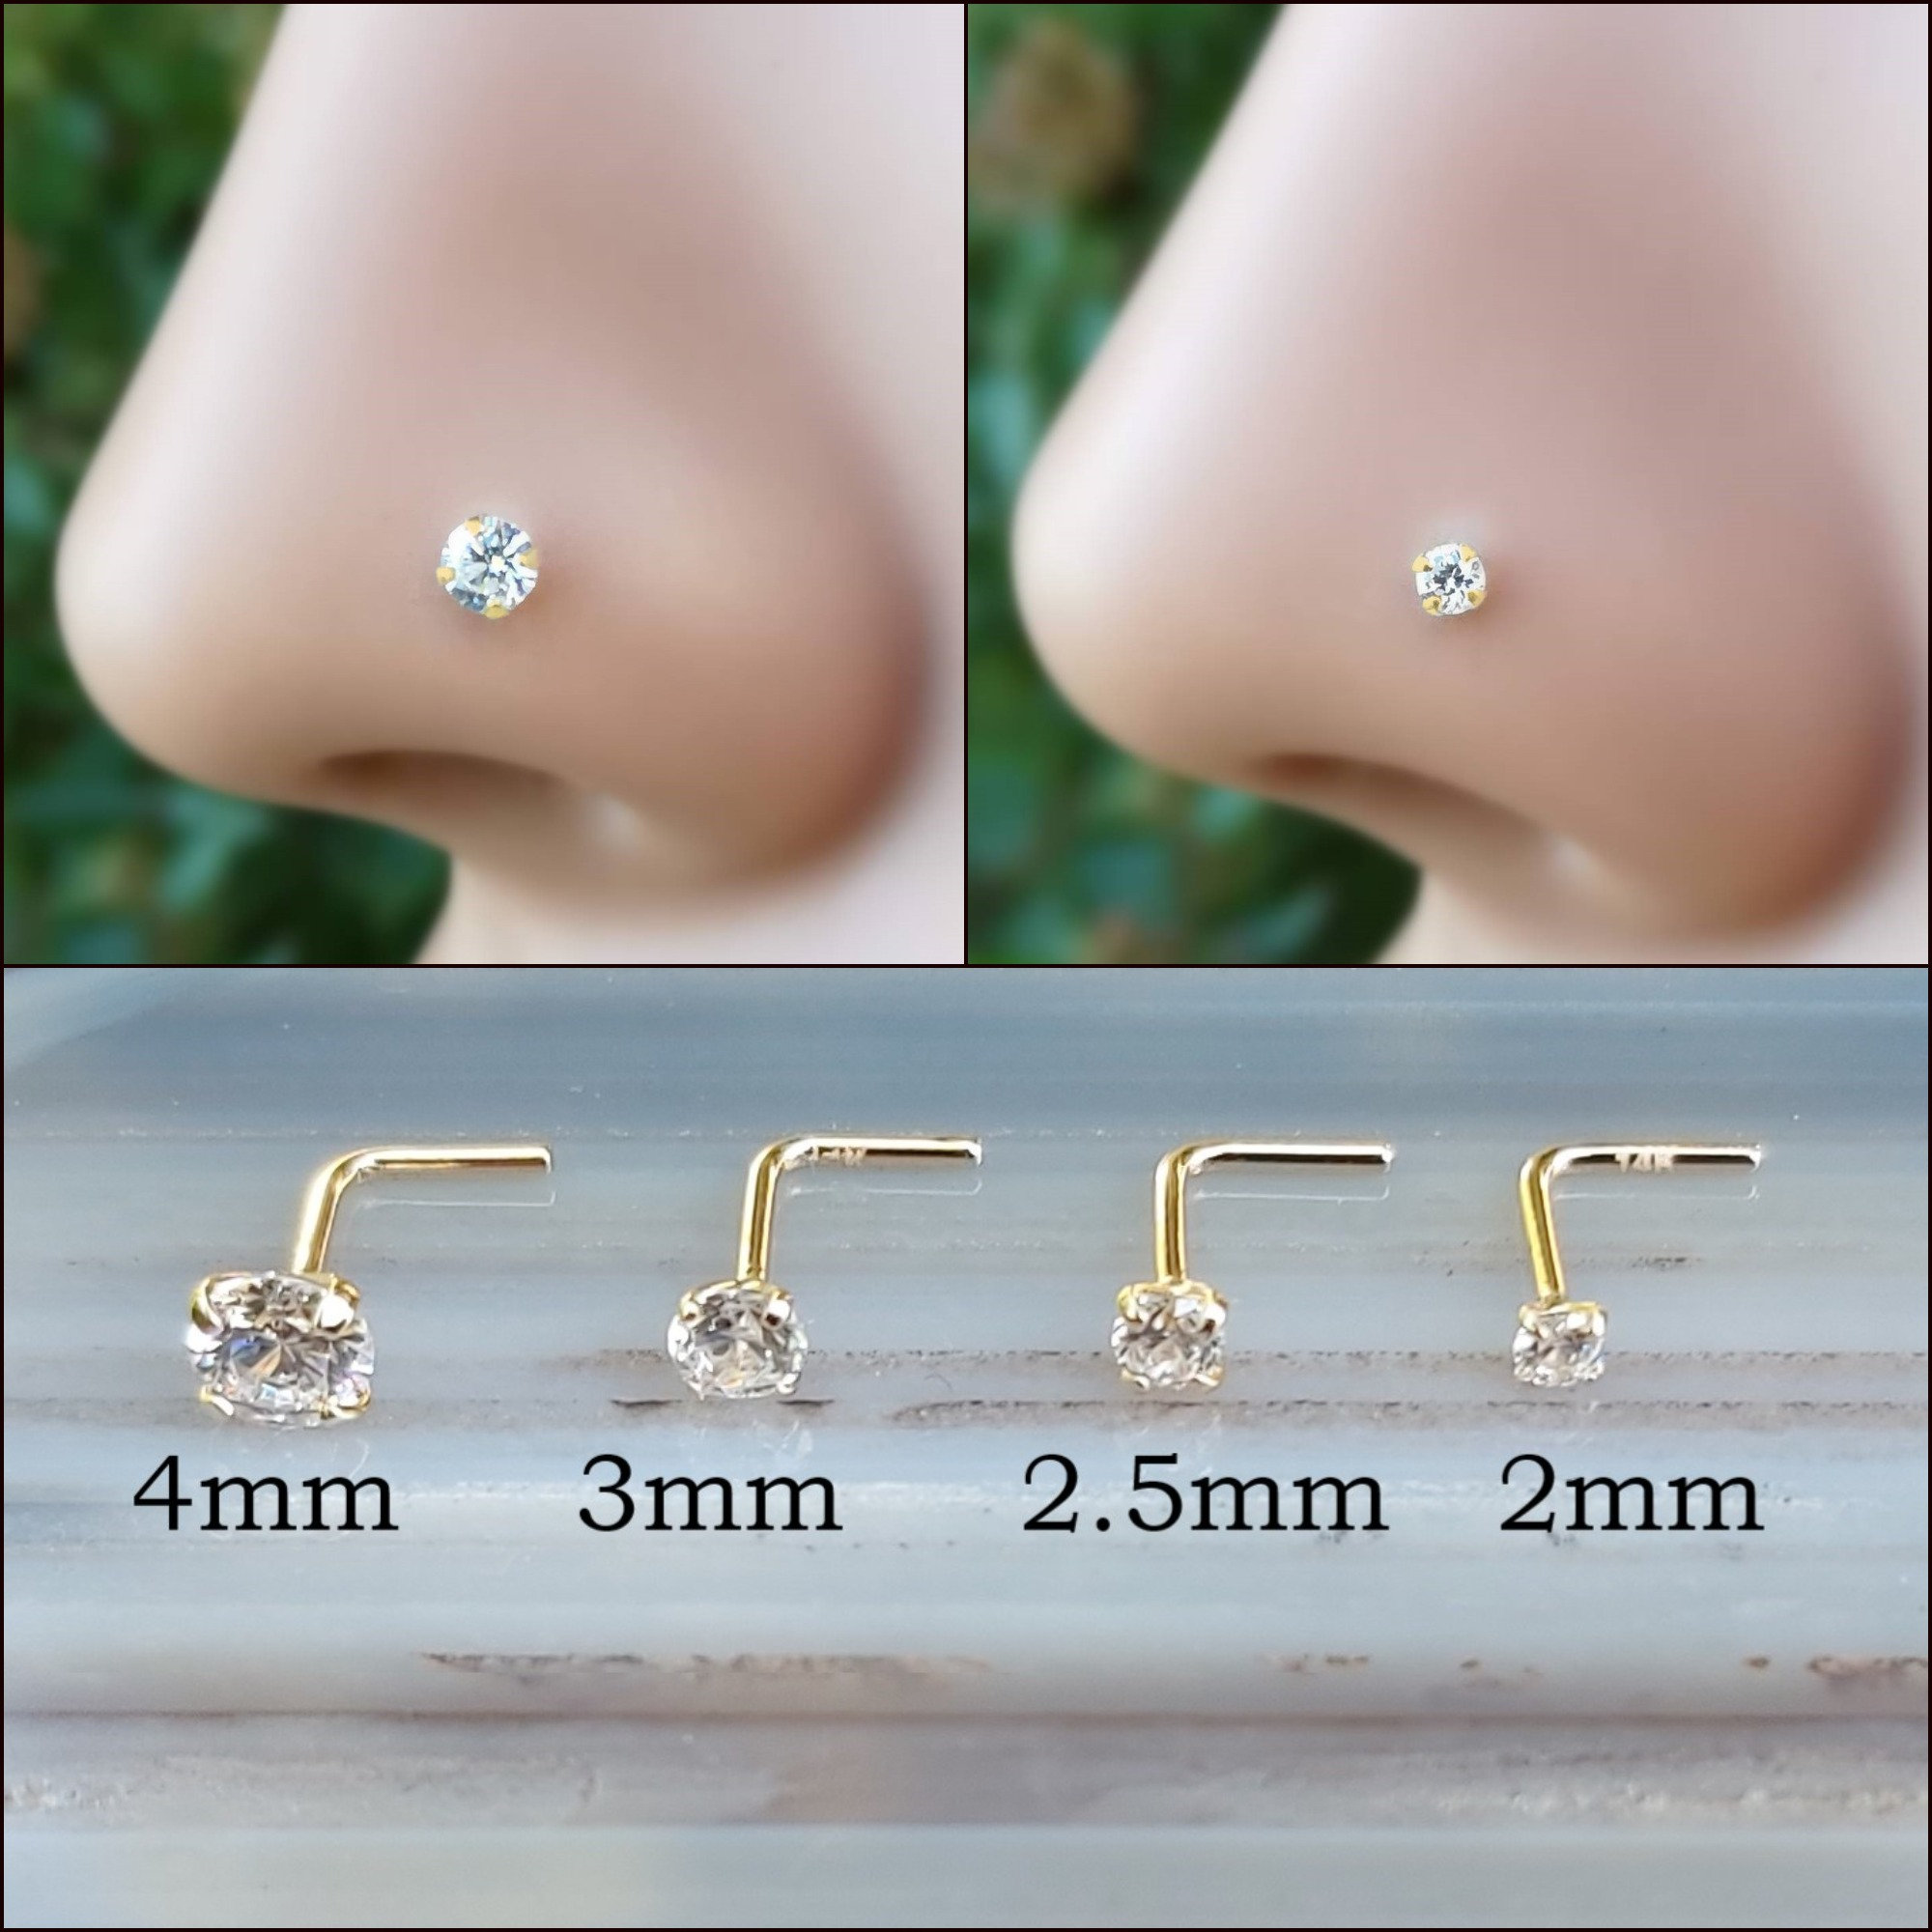 Solid Gold Nose Ring 14kt Solid Gold 14kt Genuine Diamond Nose Ring Minimalistic Jewelry Gold Nose Stud Nose Stud Sieraden Lichaamssieraden Neusringen & studs 